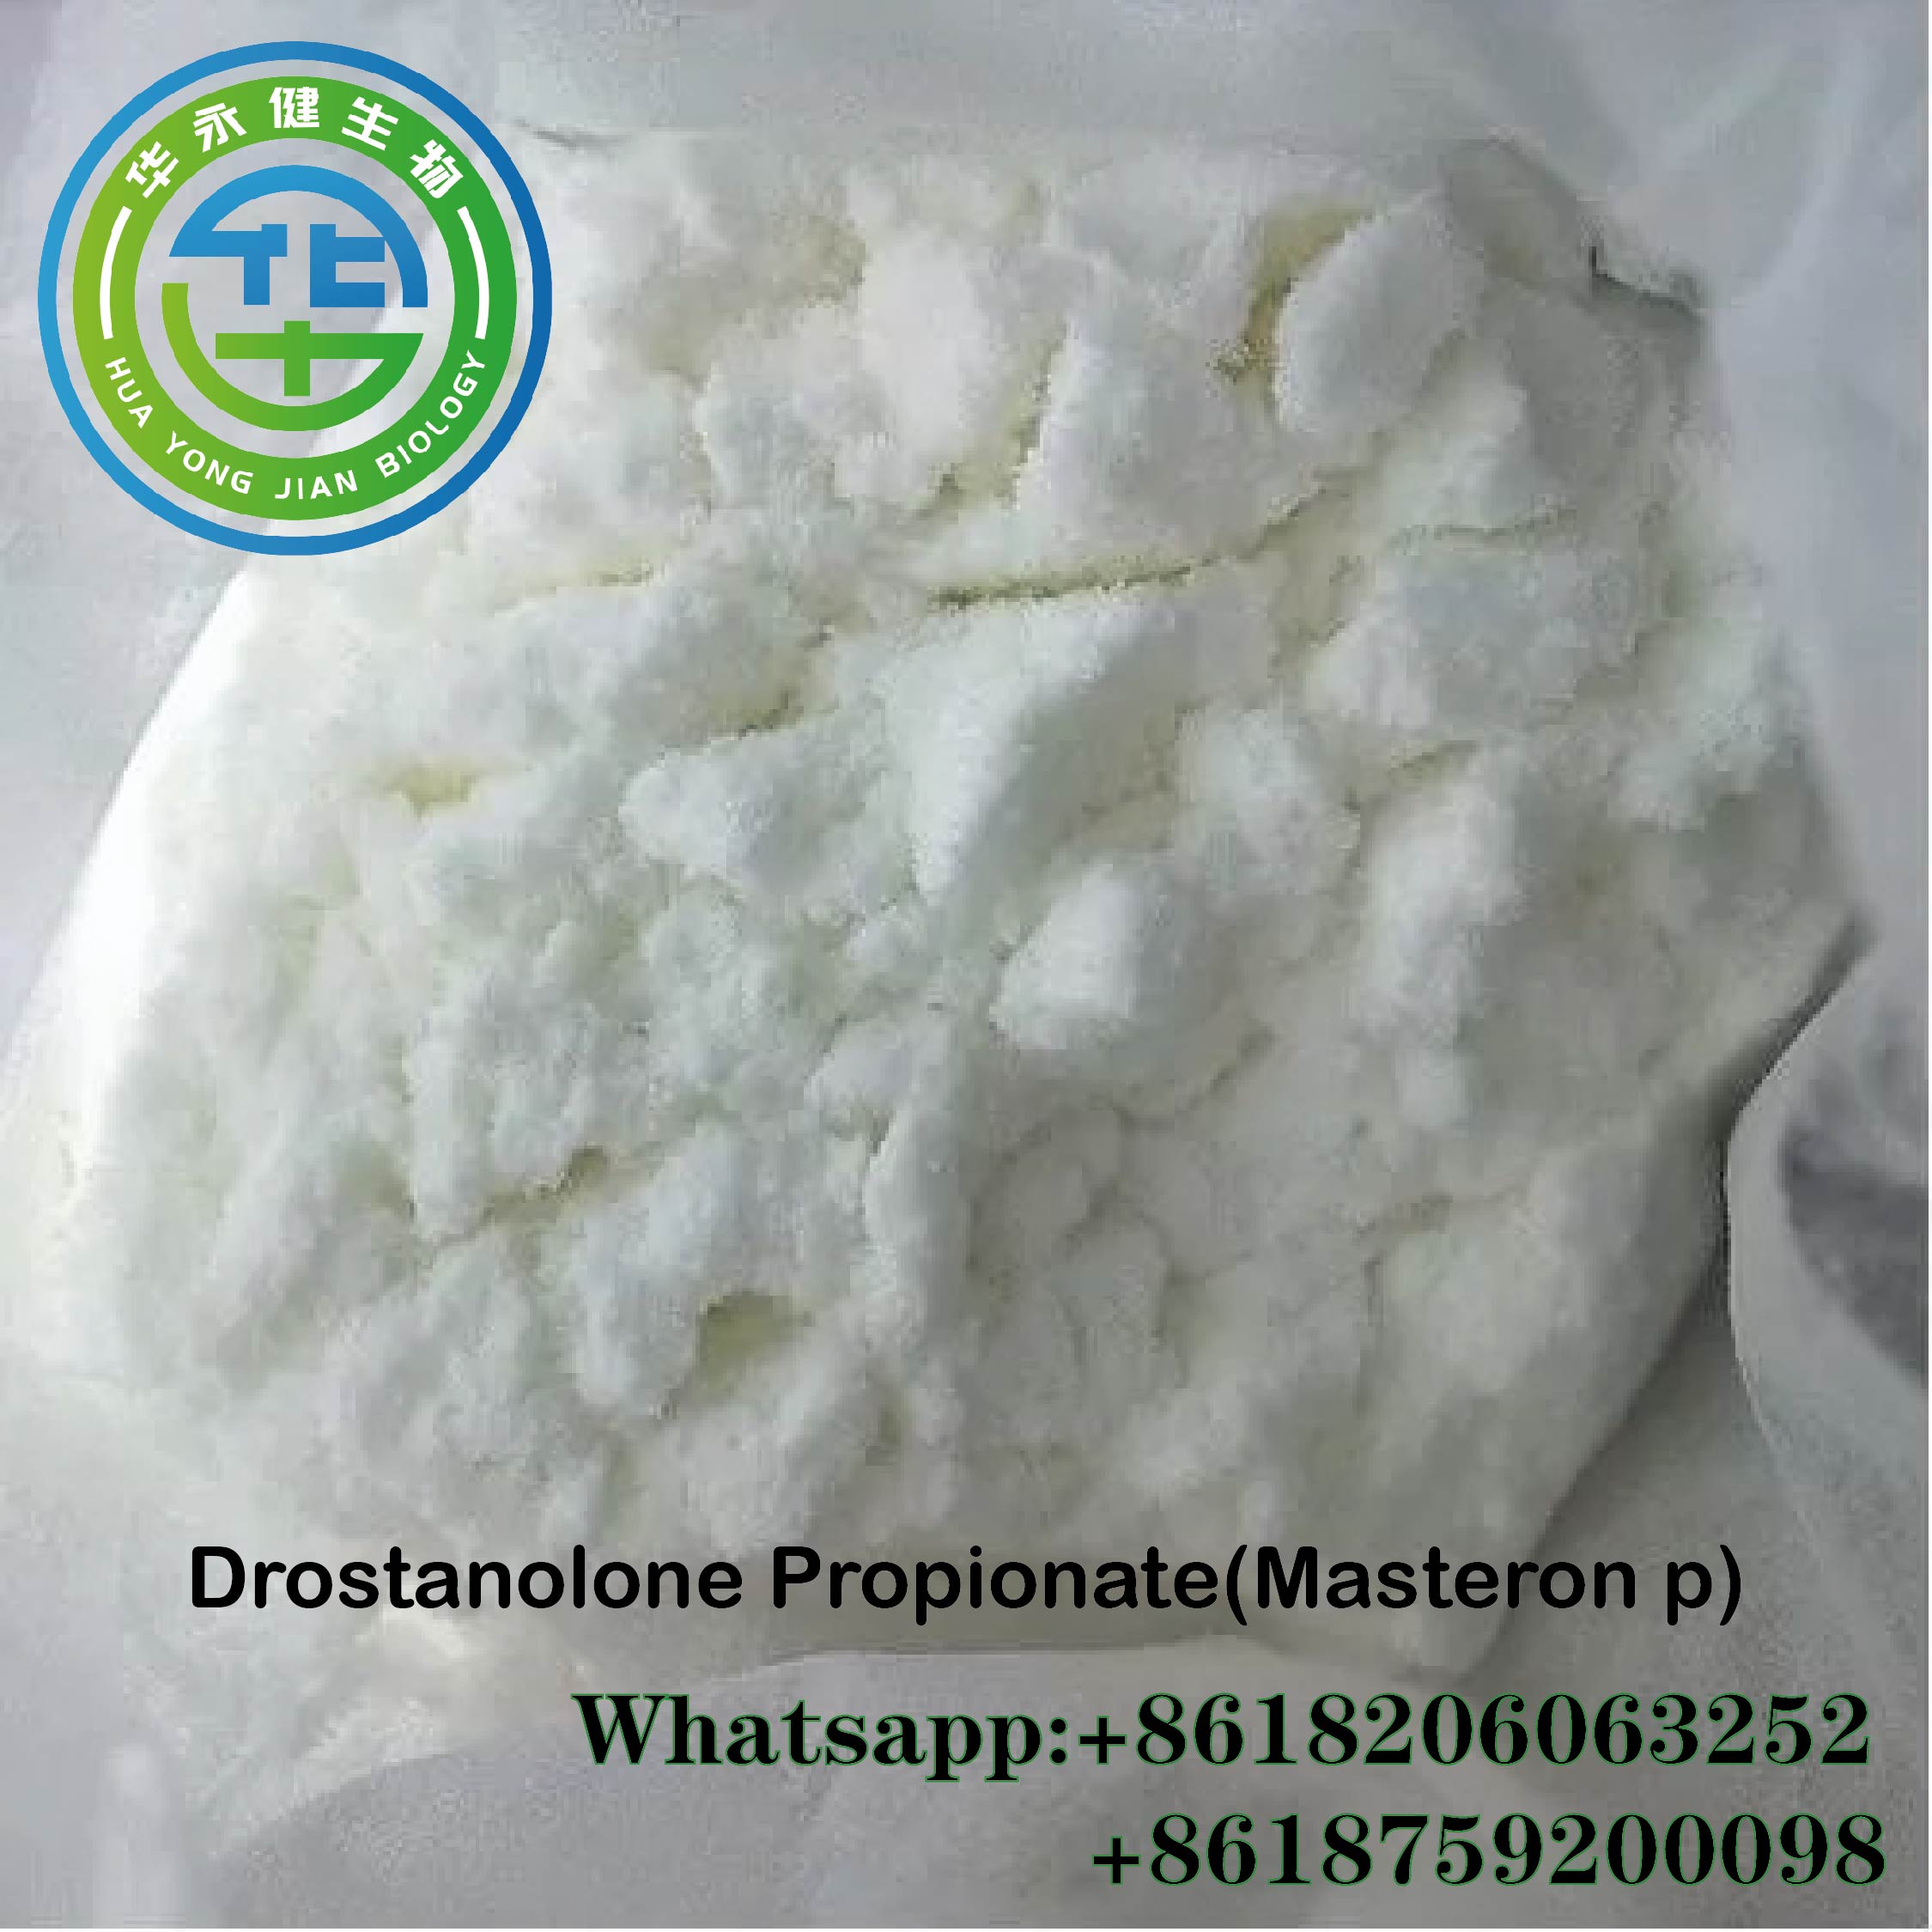 Anabolic Injection Drostanolone Propionate Steroids Powder Masteron For Bodybuilding CasNO.521-12-0 Valin mynd